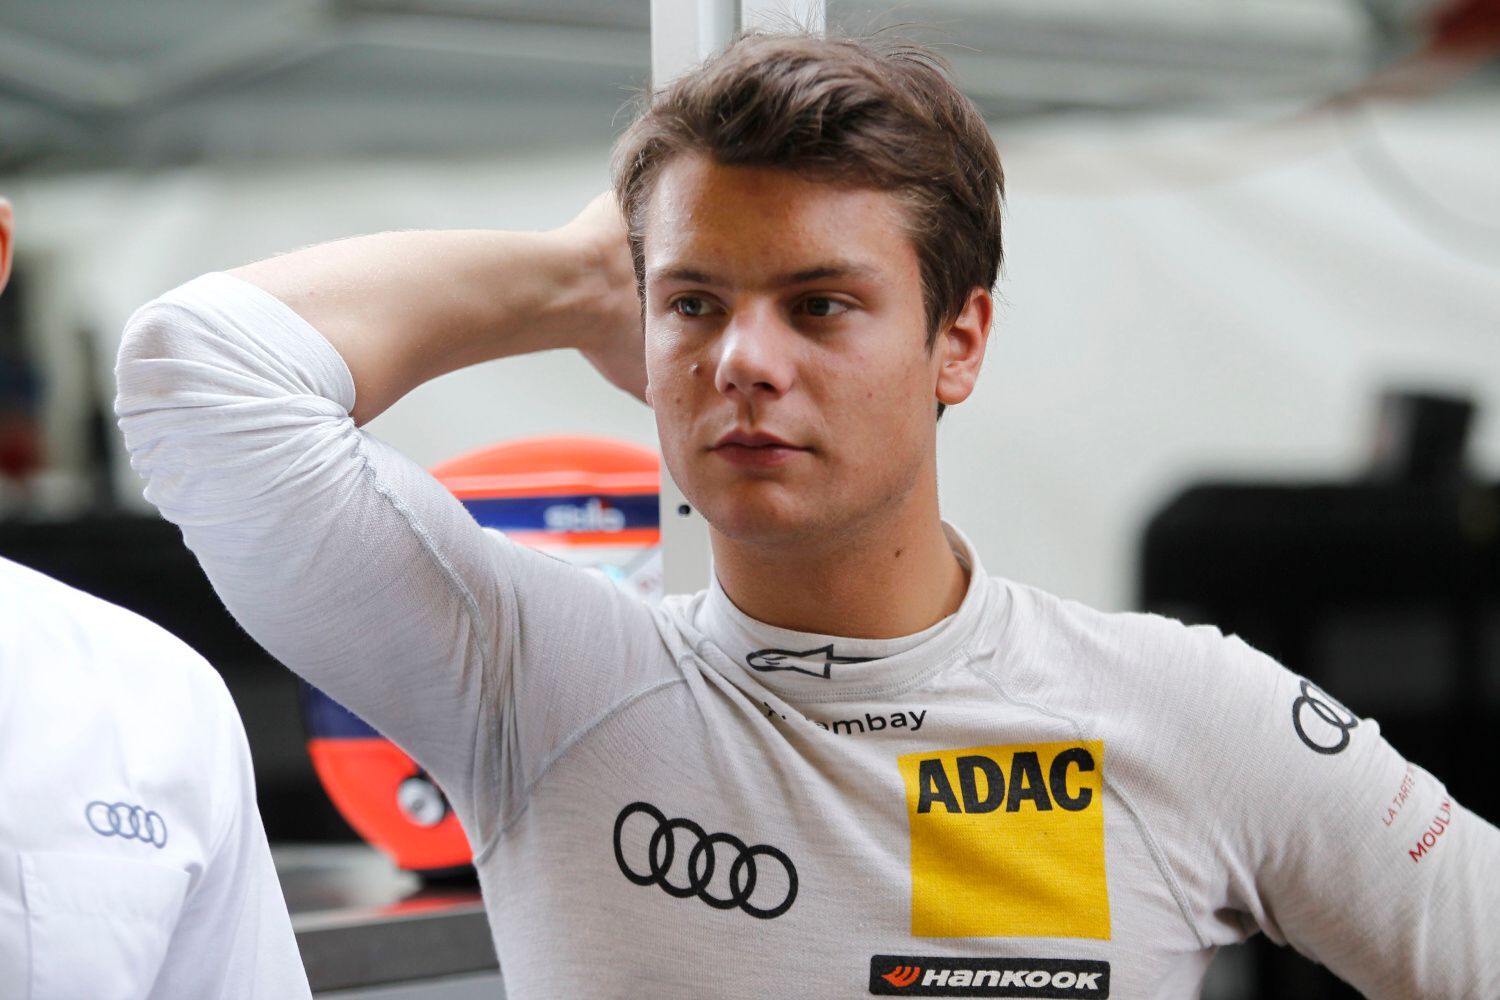 DTM 2015: Adrien Tambay, Audi